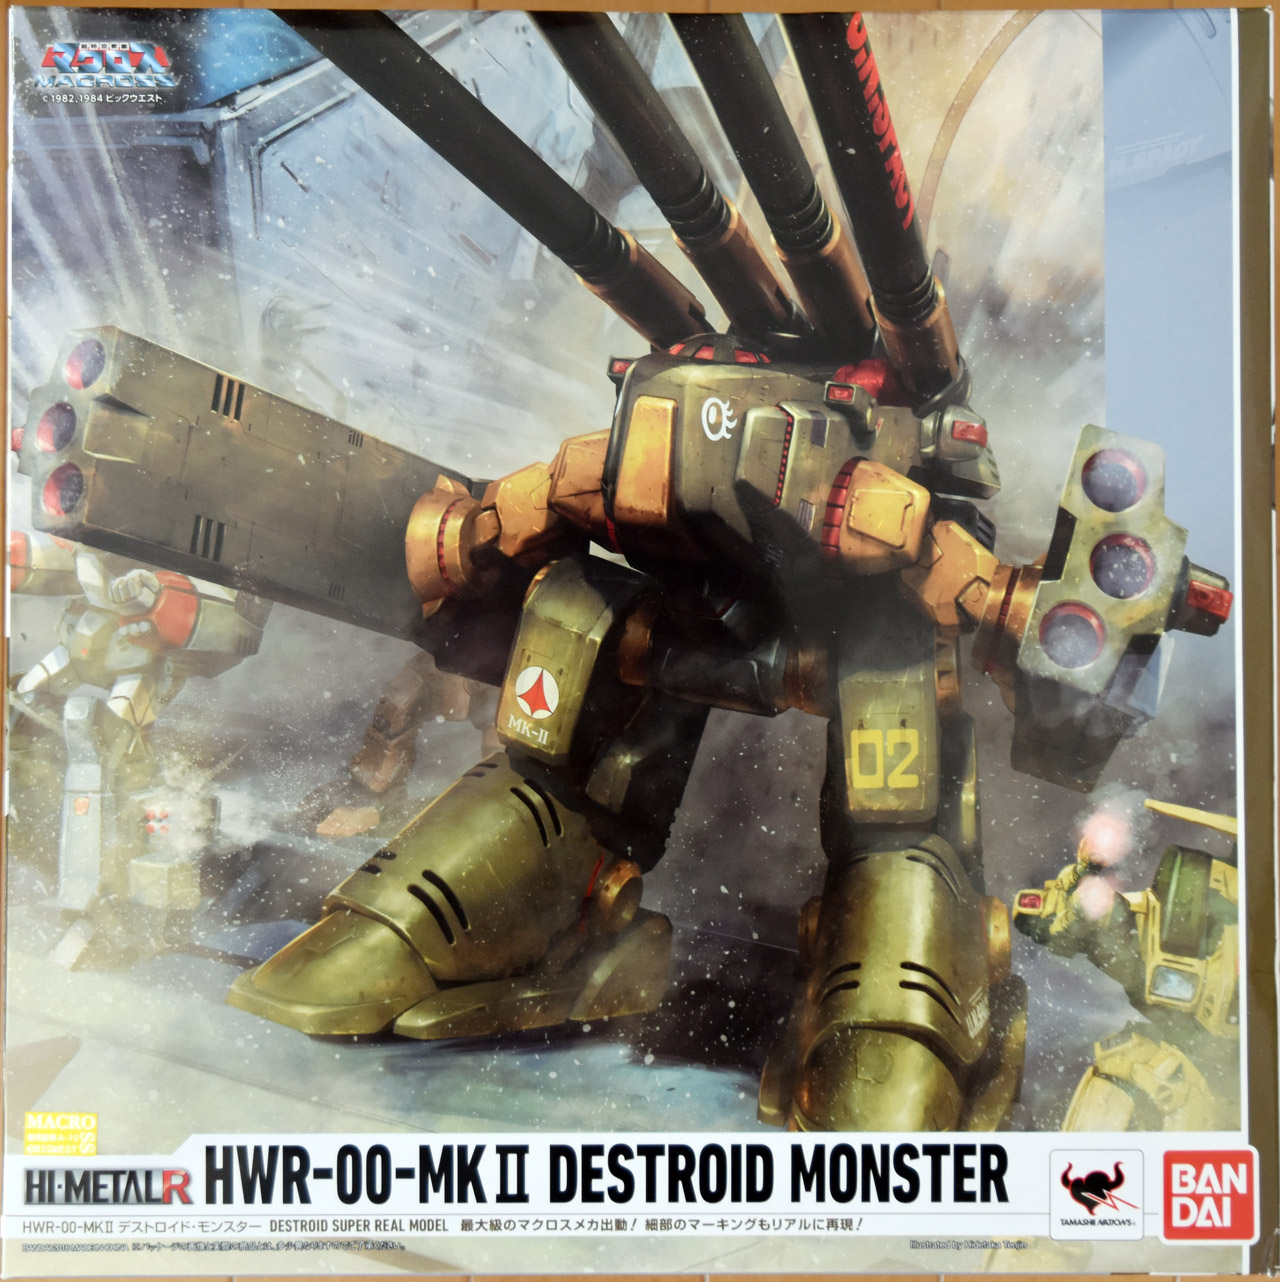 Hi Metal R Hwr 00 Mkii Destroid Monster By Bandai